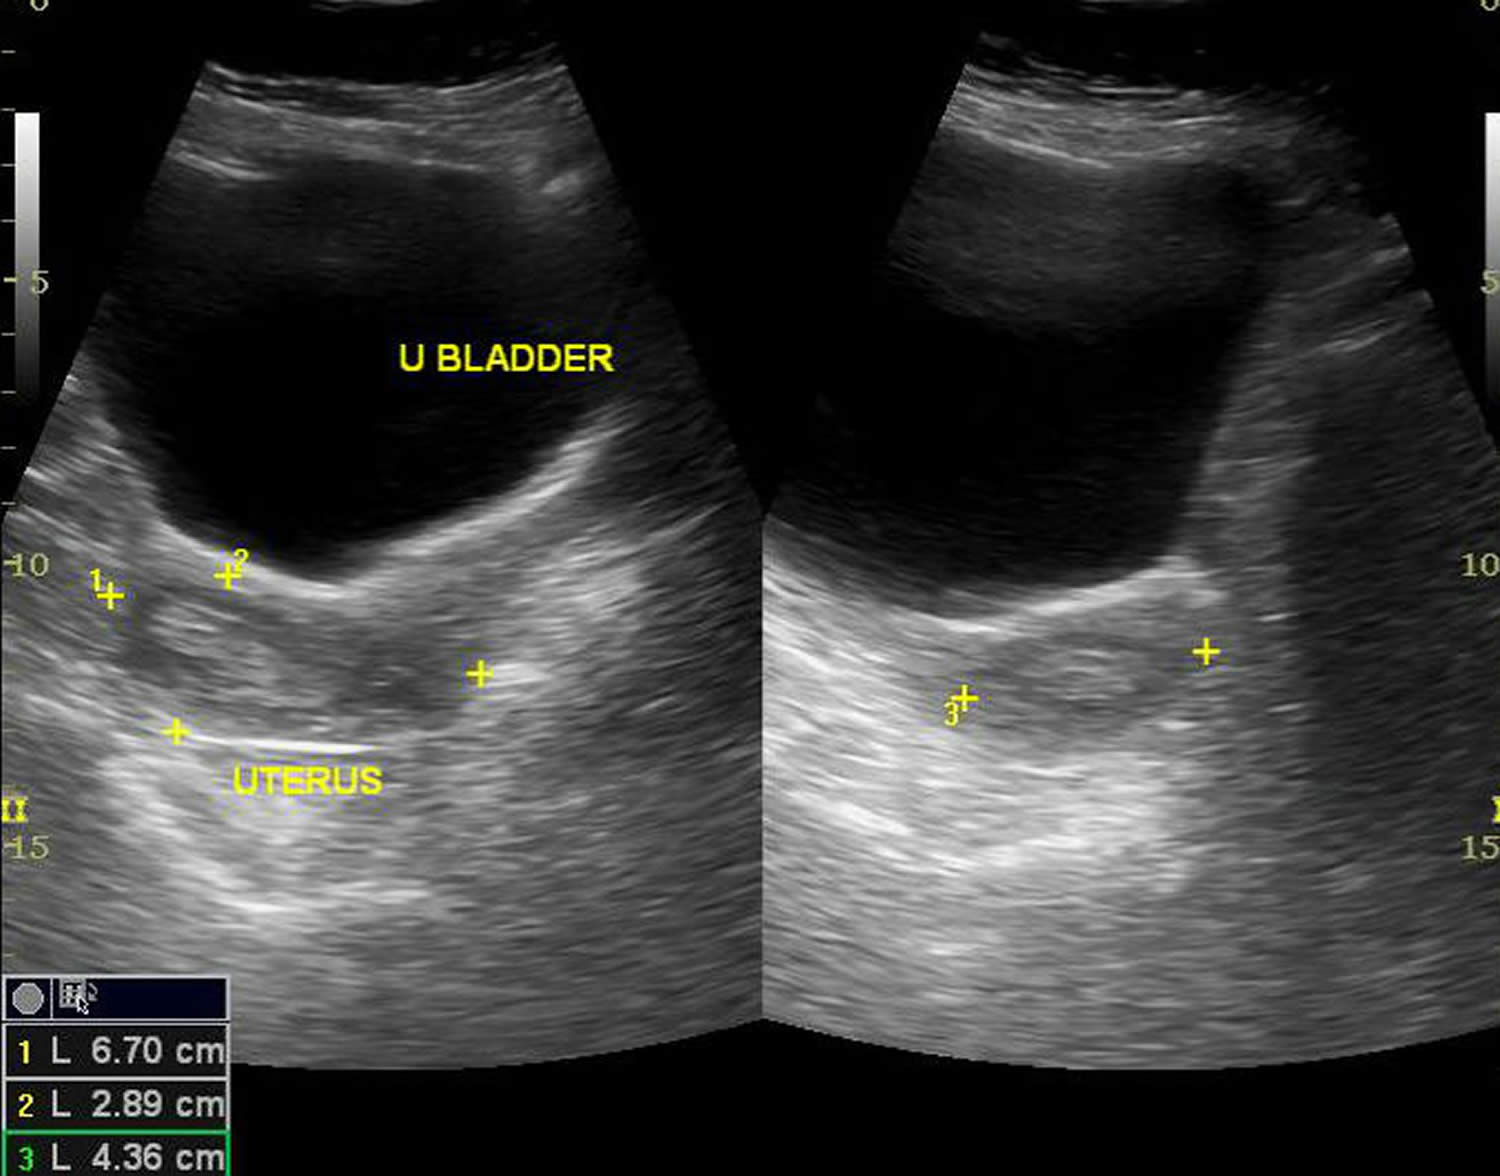 Endometrial hyperplasia ultrasound